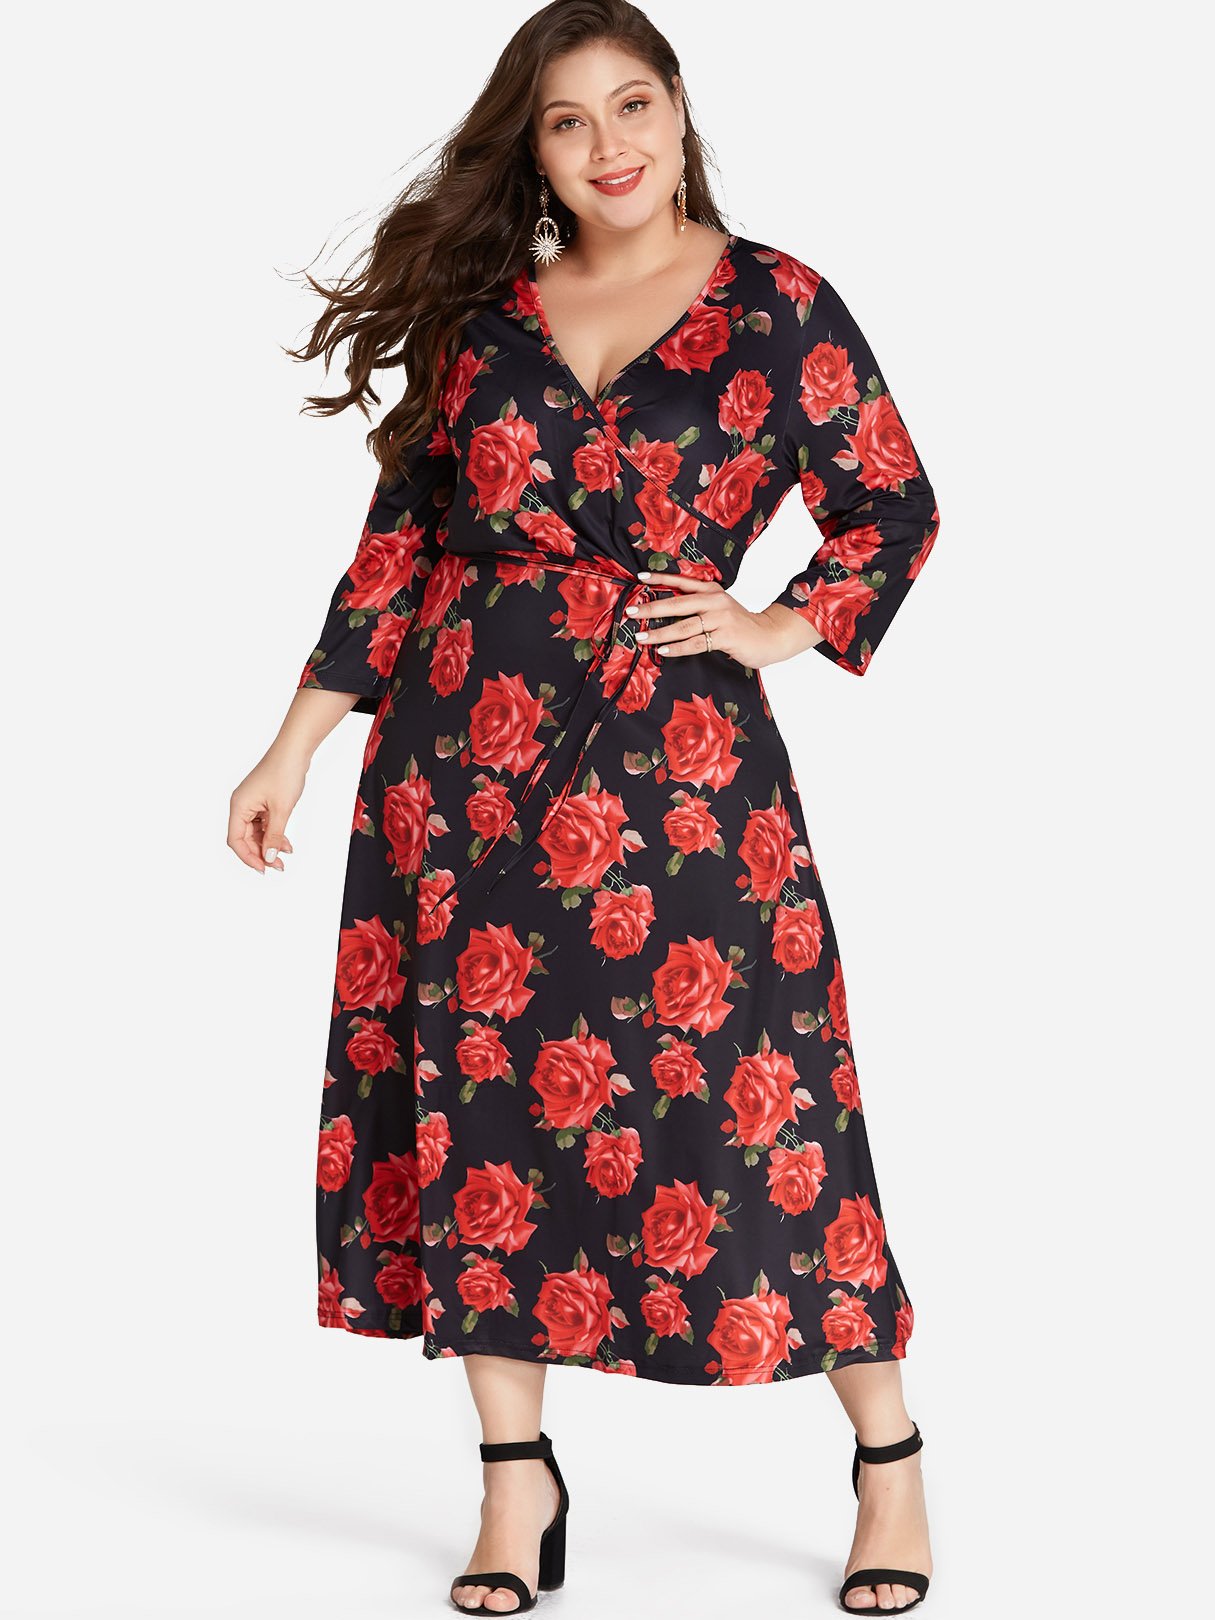 Wholesale V-Neck Floral Print Self-Tie Wrap 3/4 Sleeve Rose Plus Size Dress